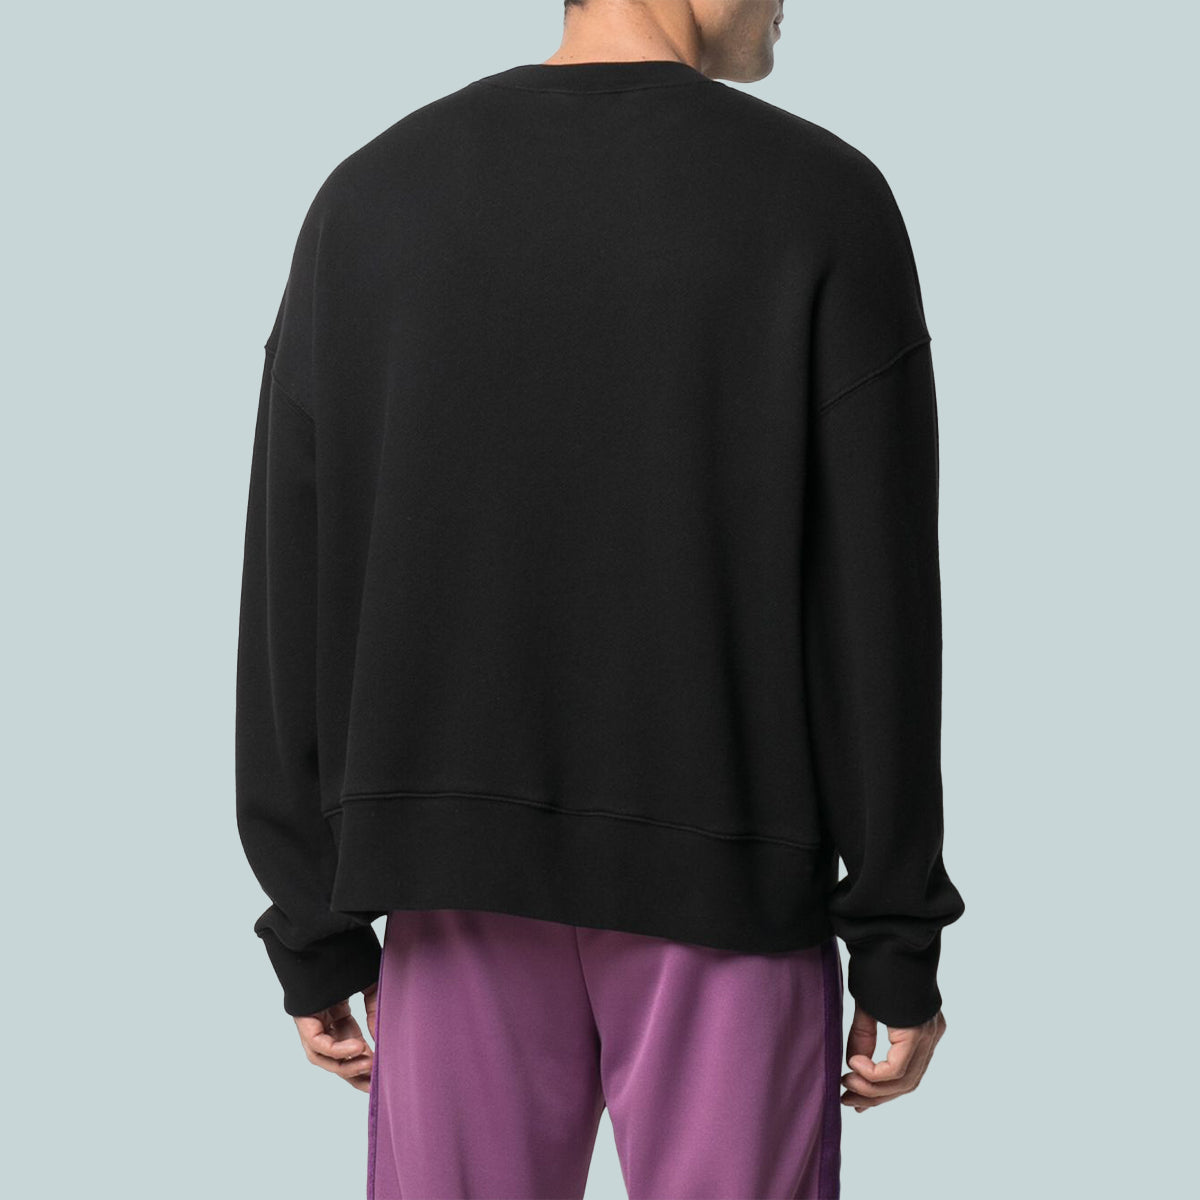 Croco sweatshirt black